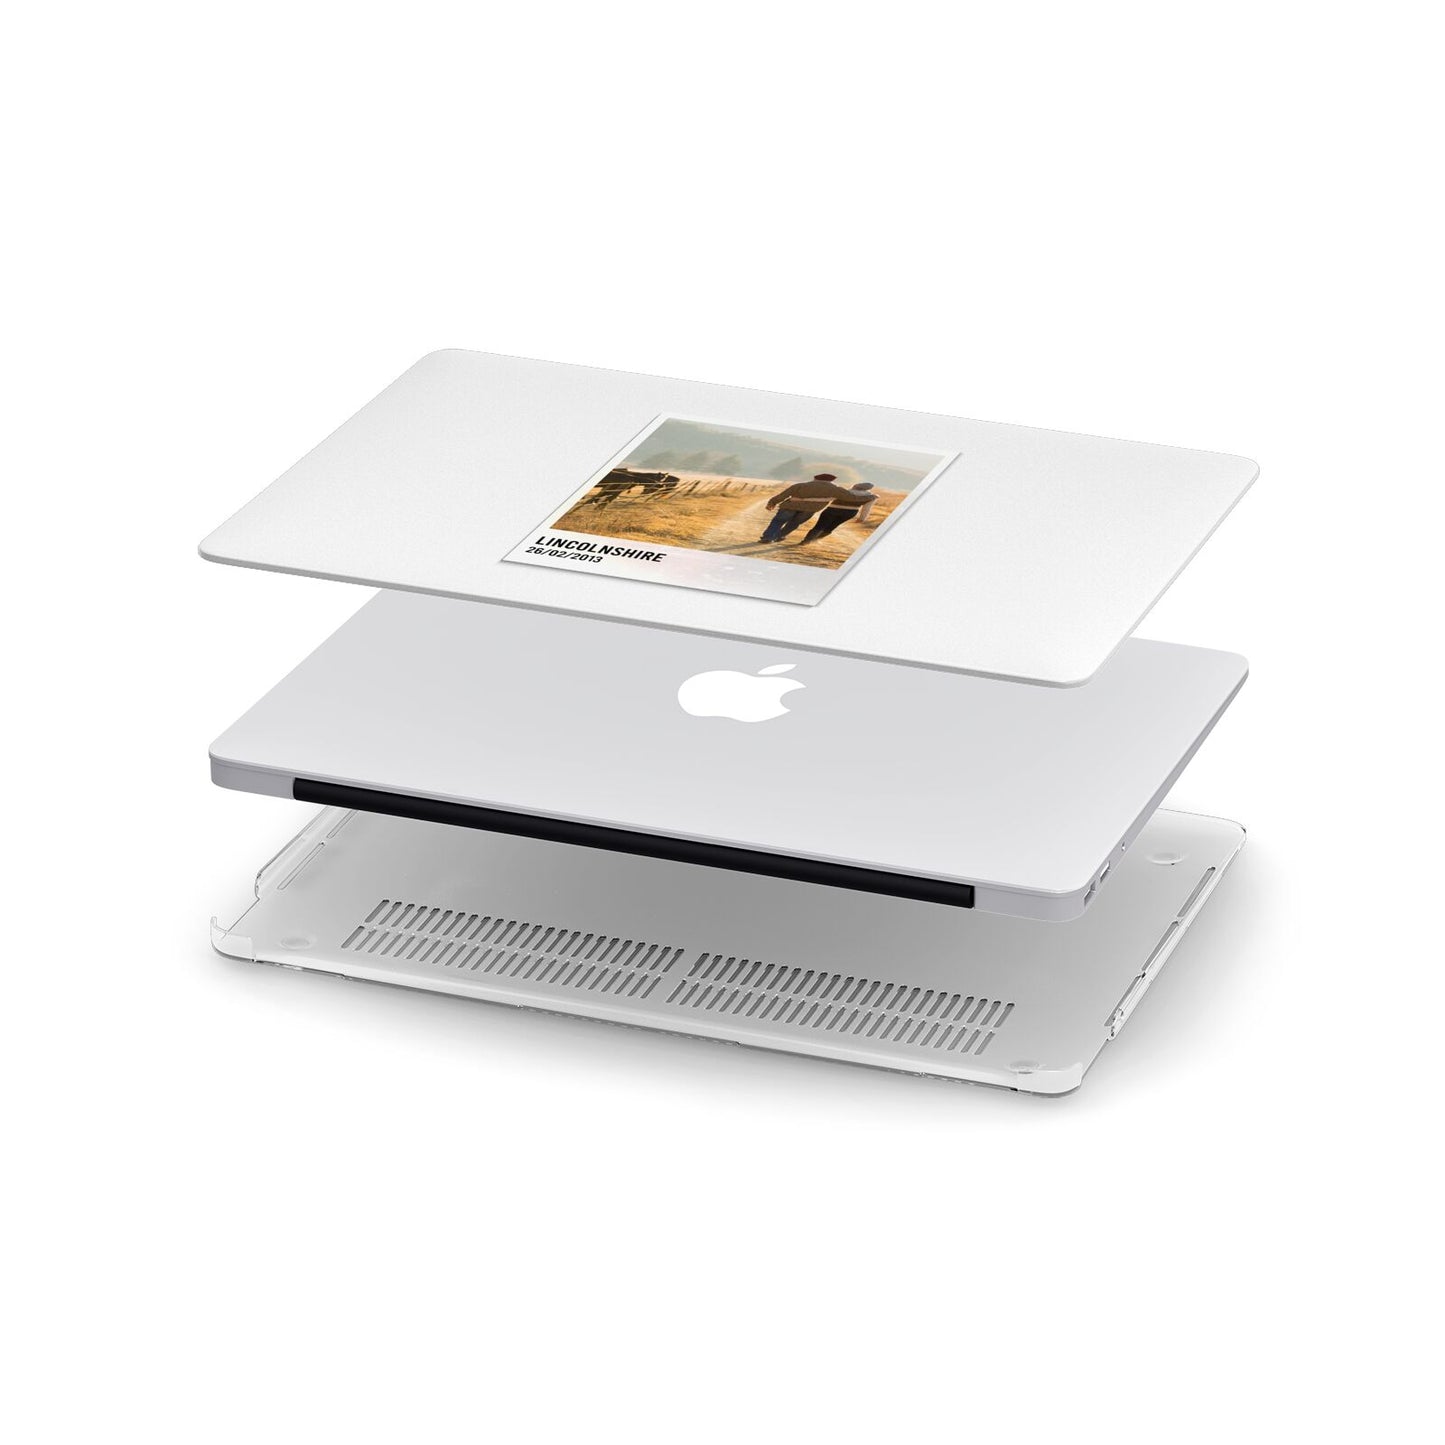 Holiday Memory Personalised Photo Apple MacBook Case in Detail